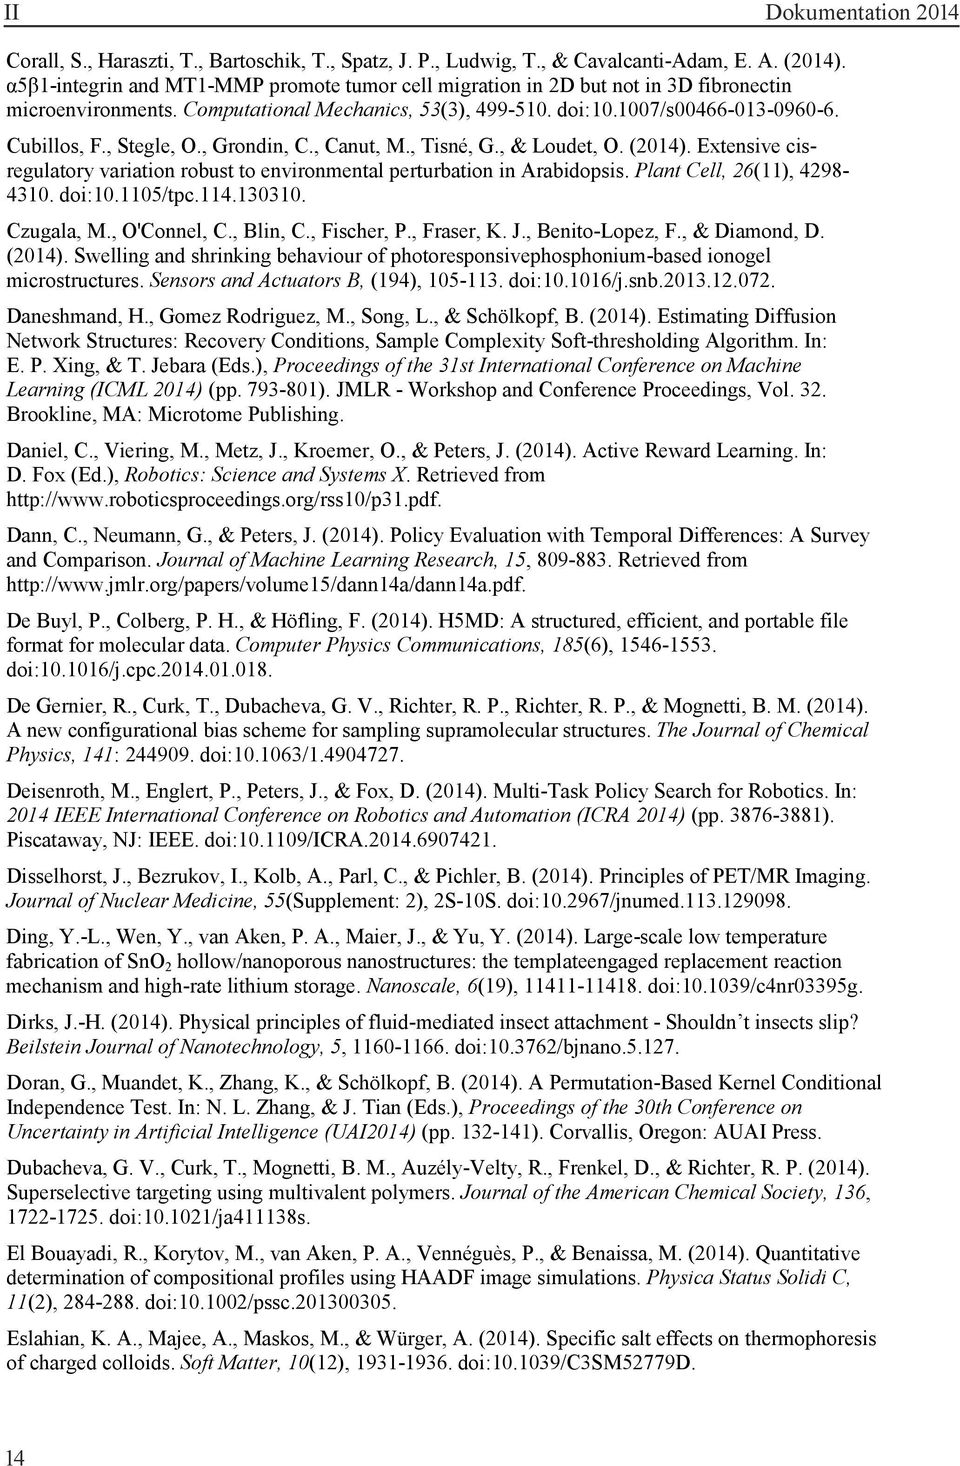 , Stegle, O., Grondin, C., Canut, M., Tisné, G., & Loudet, O. (2014). Extensive cisregulatory variation robust to environmental perturbation in Arabidopsis. Plant Cell, 26(11), 4298-4310. doi:10.